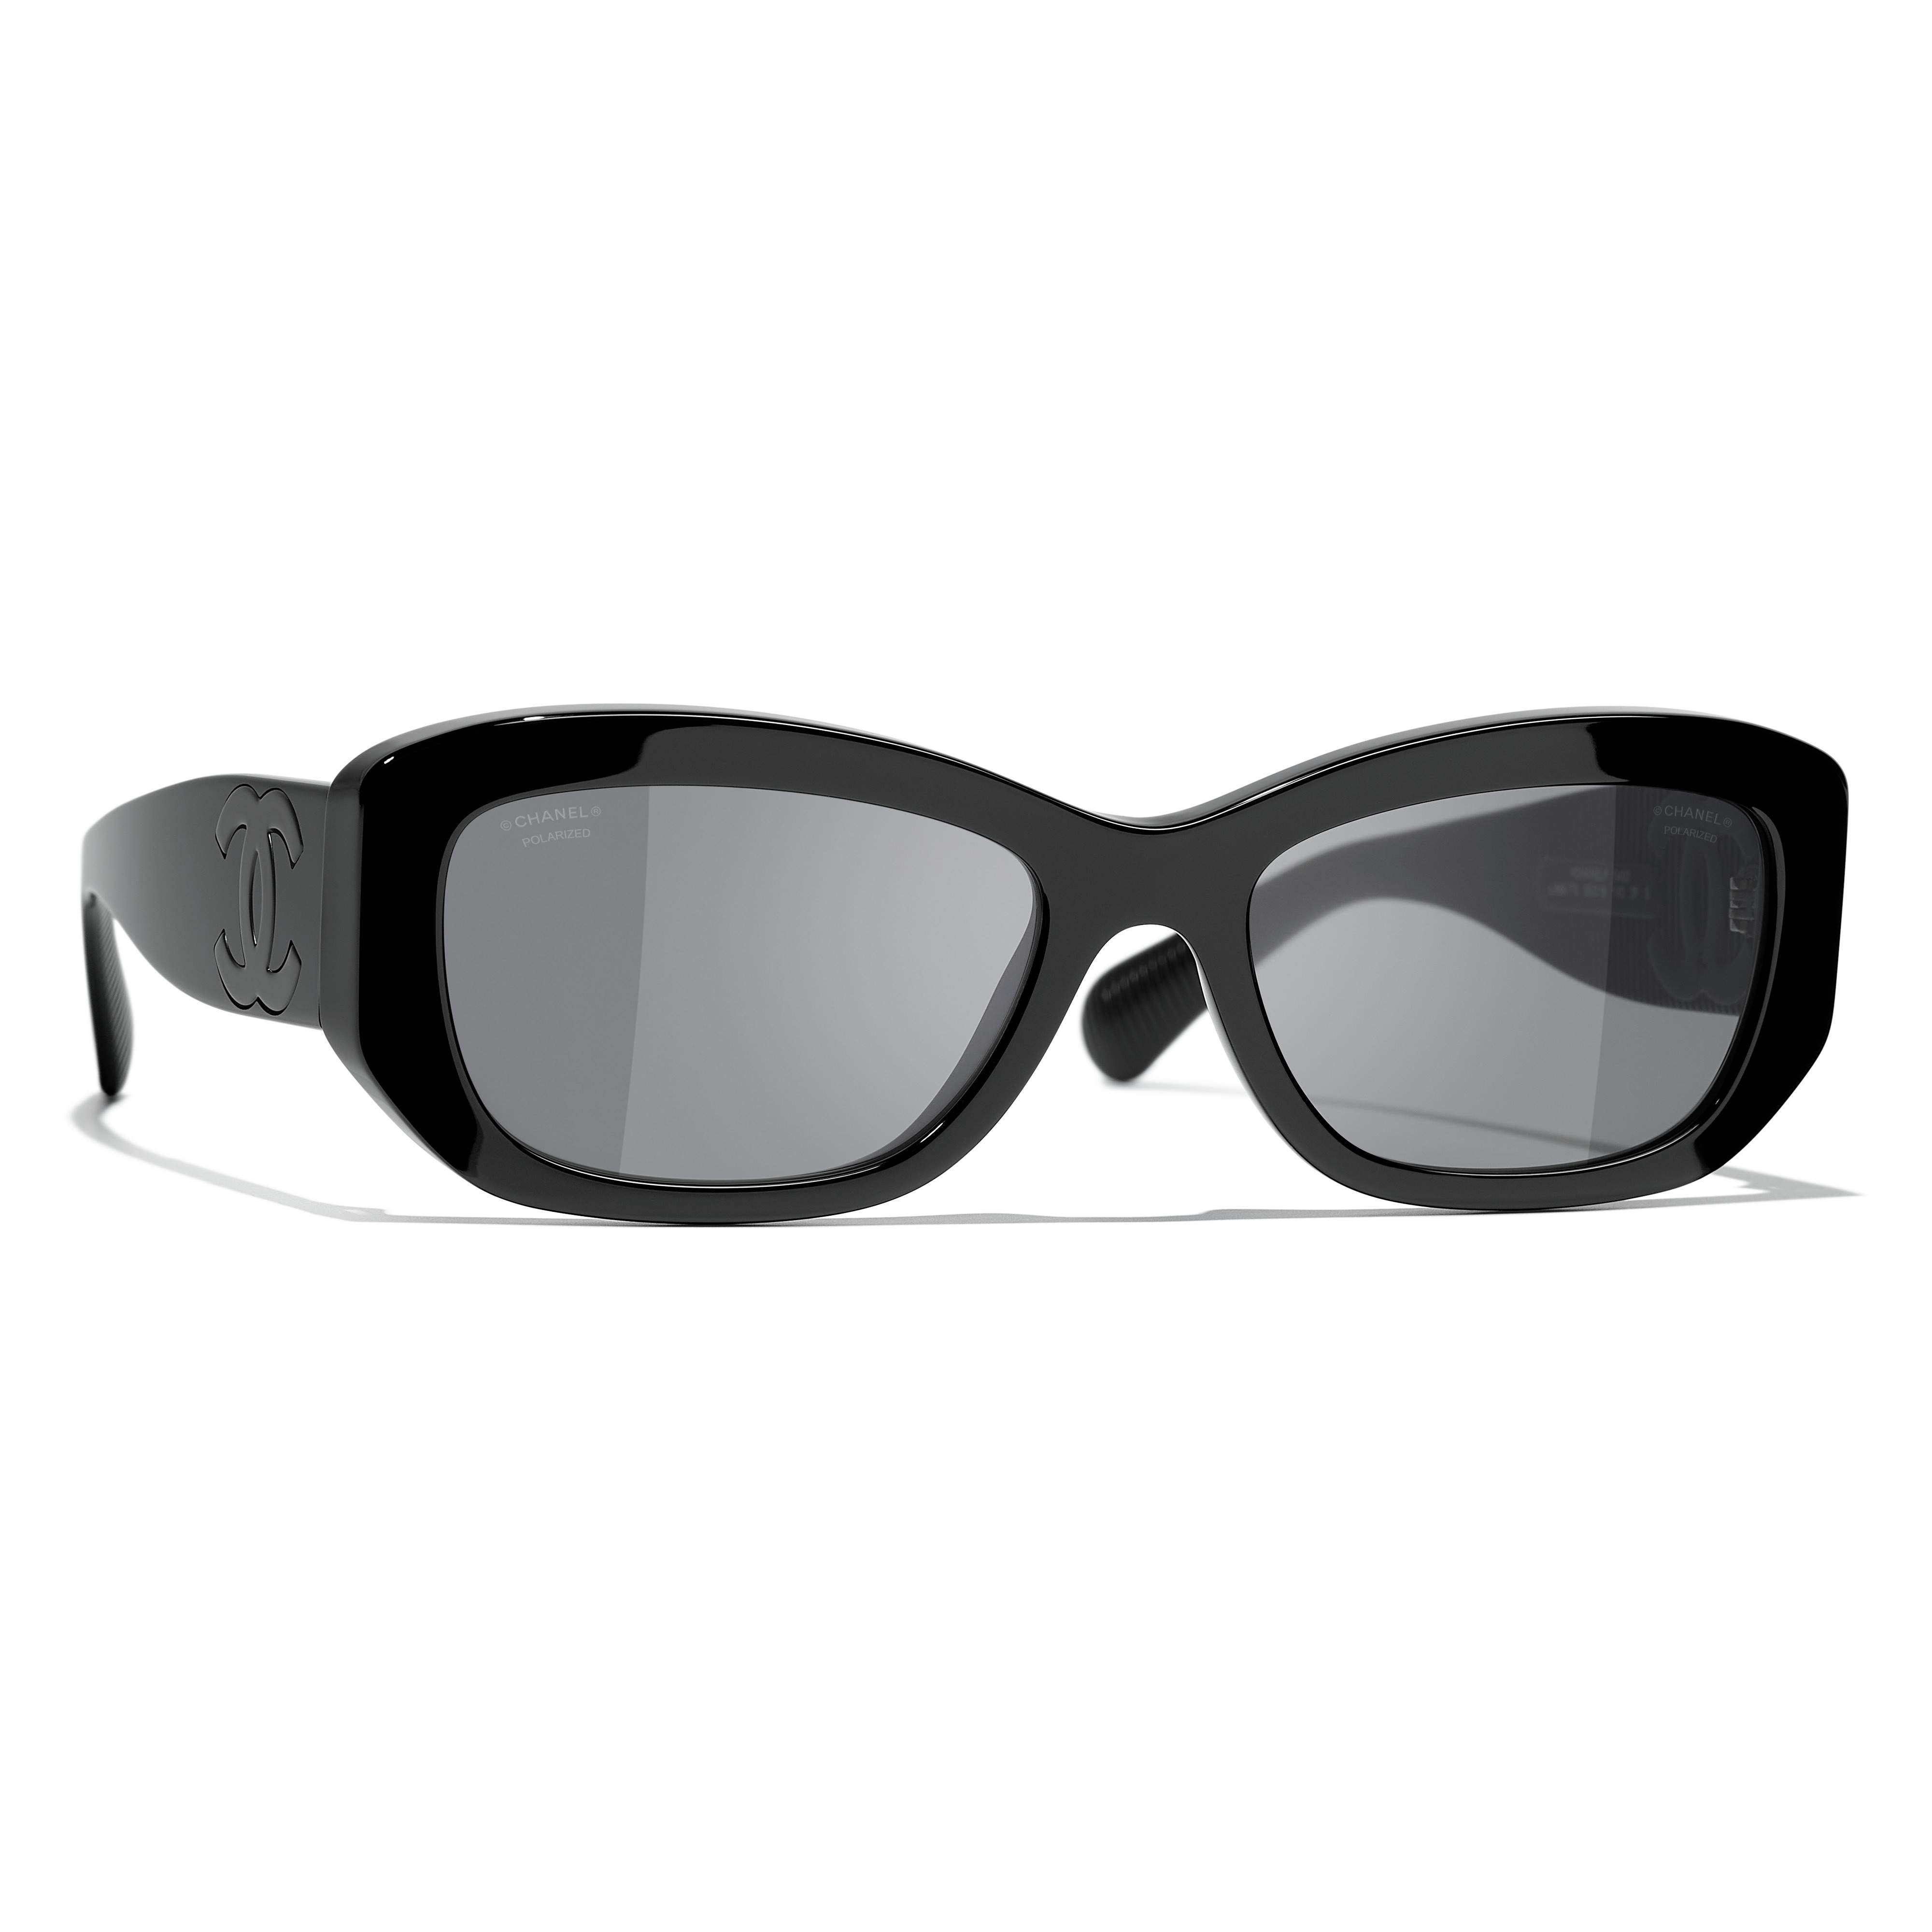 Chanel aviators  Chanel aviator sunglasses, Chanel, Leather